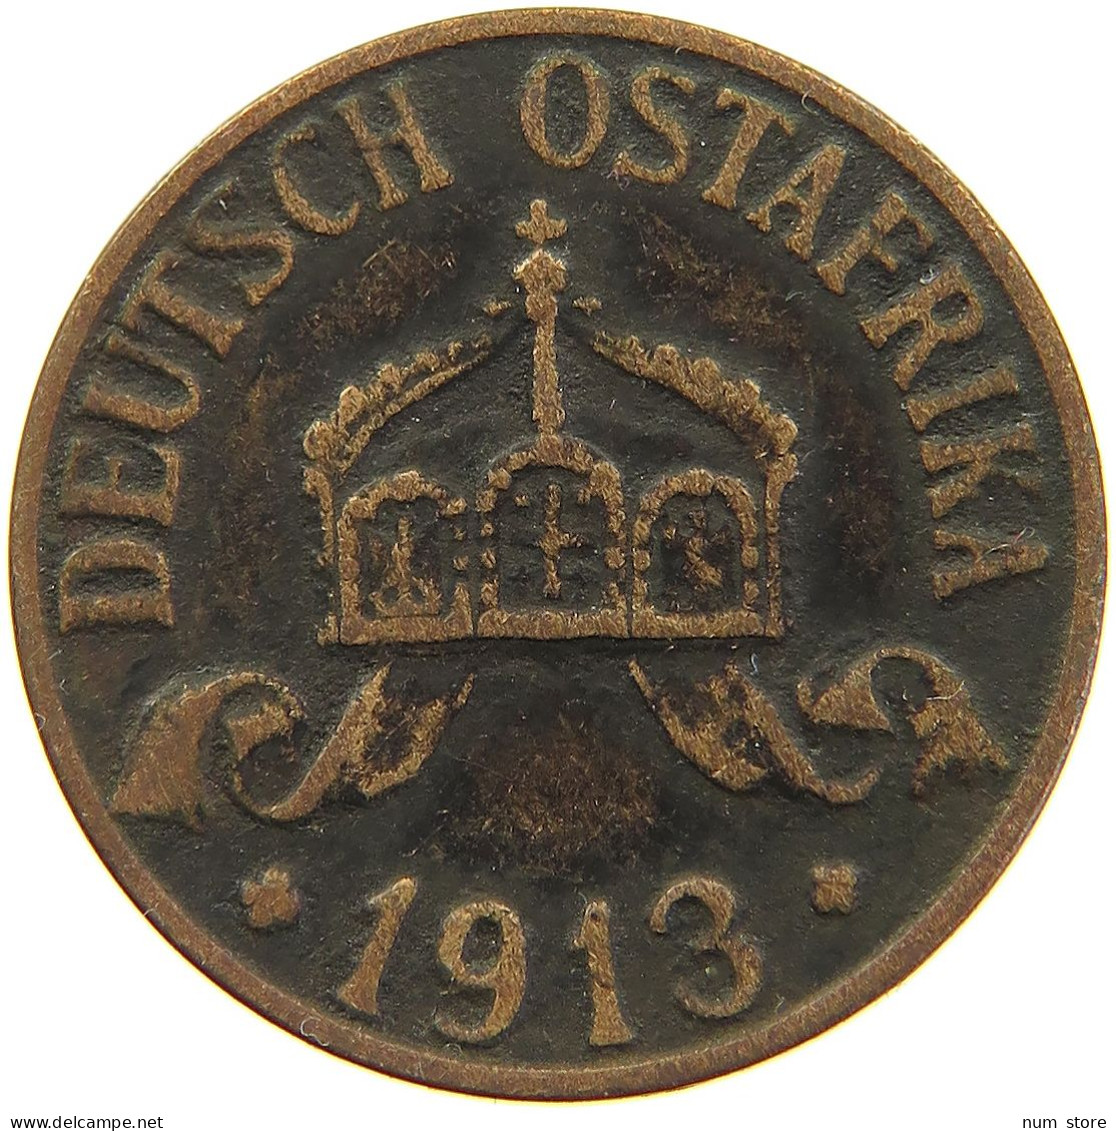 GERMANY HELLER 1913 A EAST AFRICA OSTAFRIKA #s100 0343 - Duits-Oost-Afrika